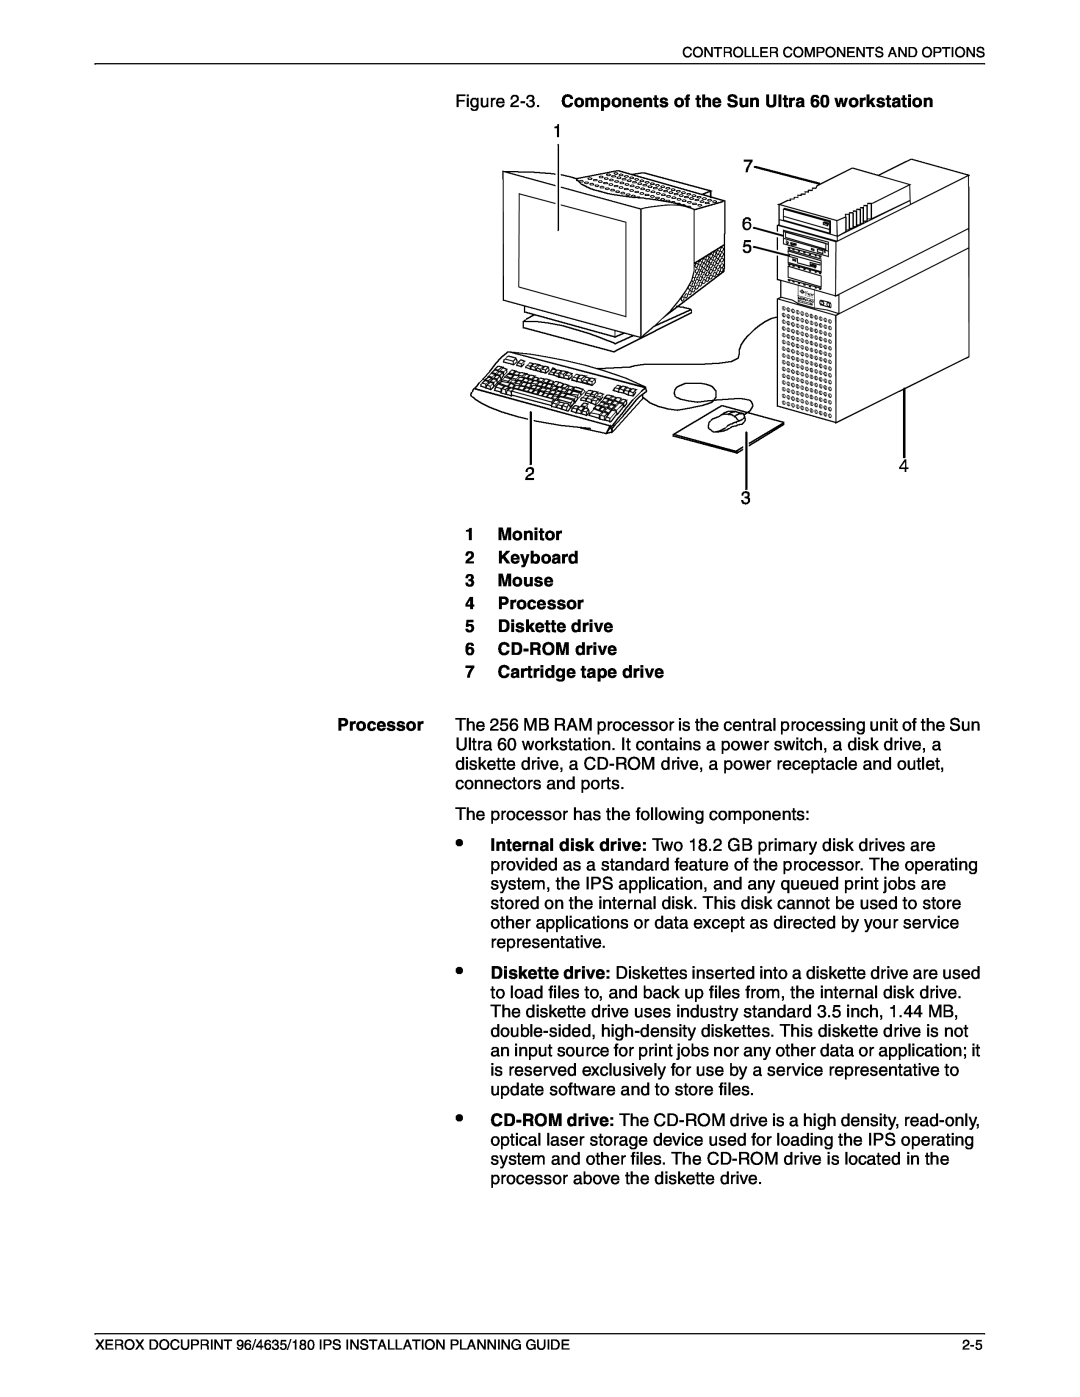 Xerox 180 IPS manual 1Monitor 2Keyboard 3Mouse 4Processor, 5Diskette drive 6CD-ROMdrive, 7Cartridge tape drive 